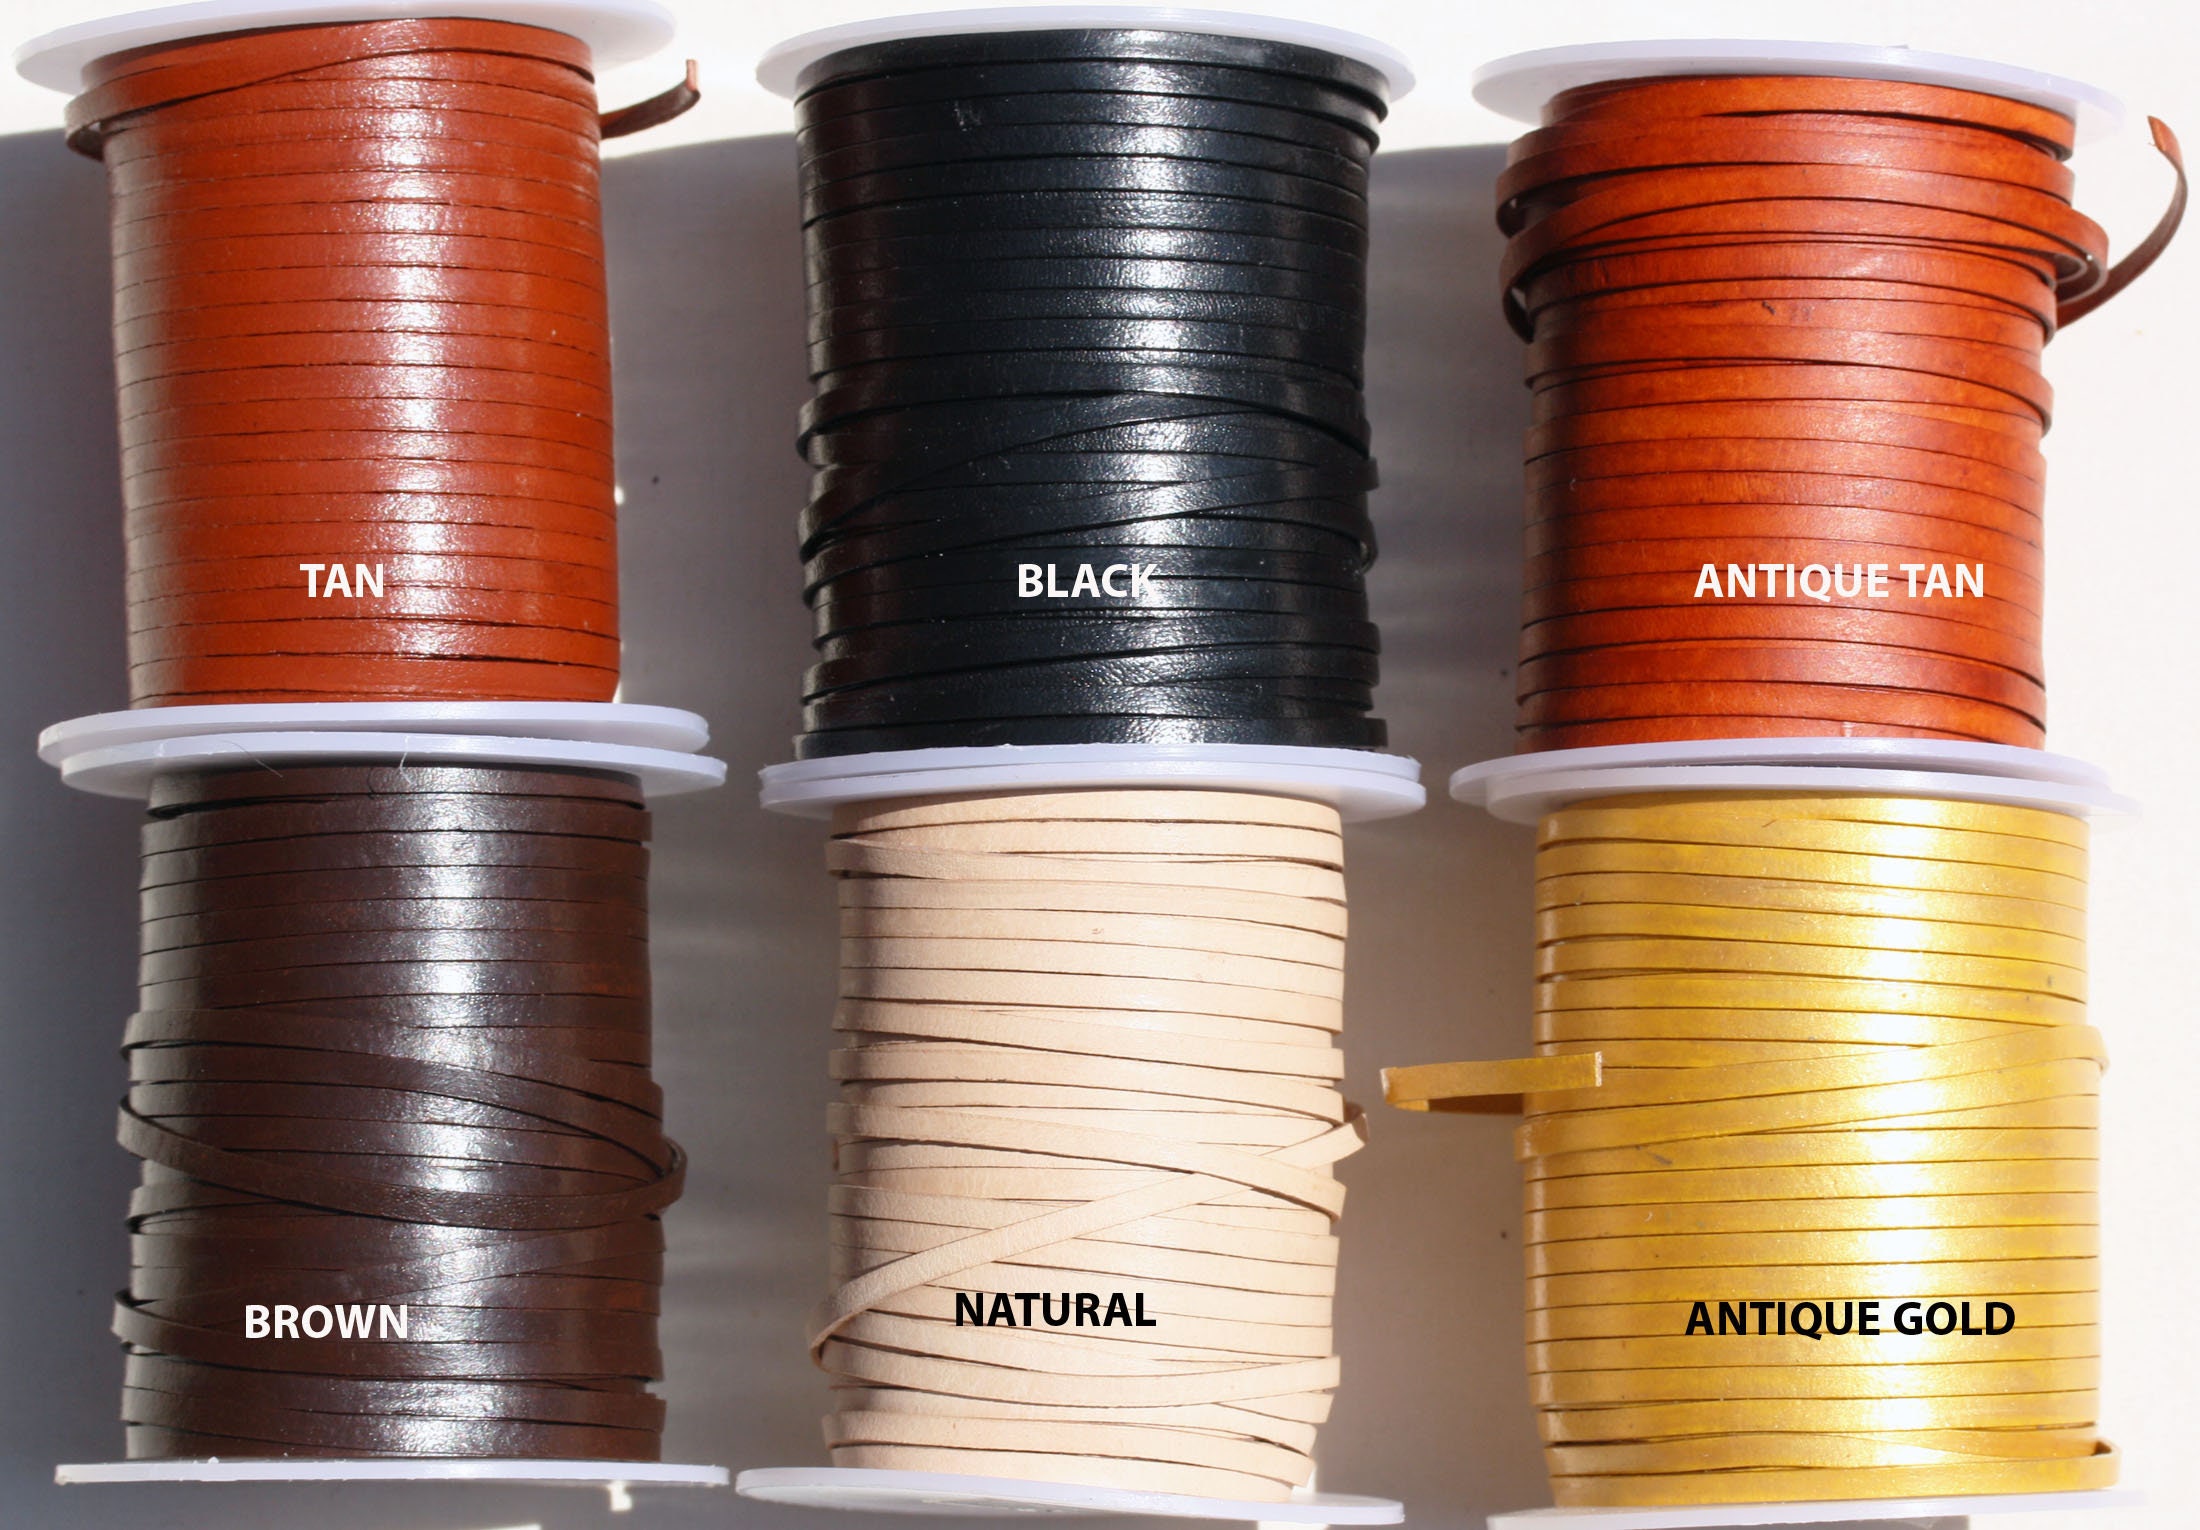 3mm Flat Genuine Leather Cord, Strip Cord Braiding String Tan 5